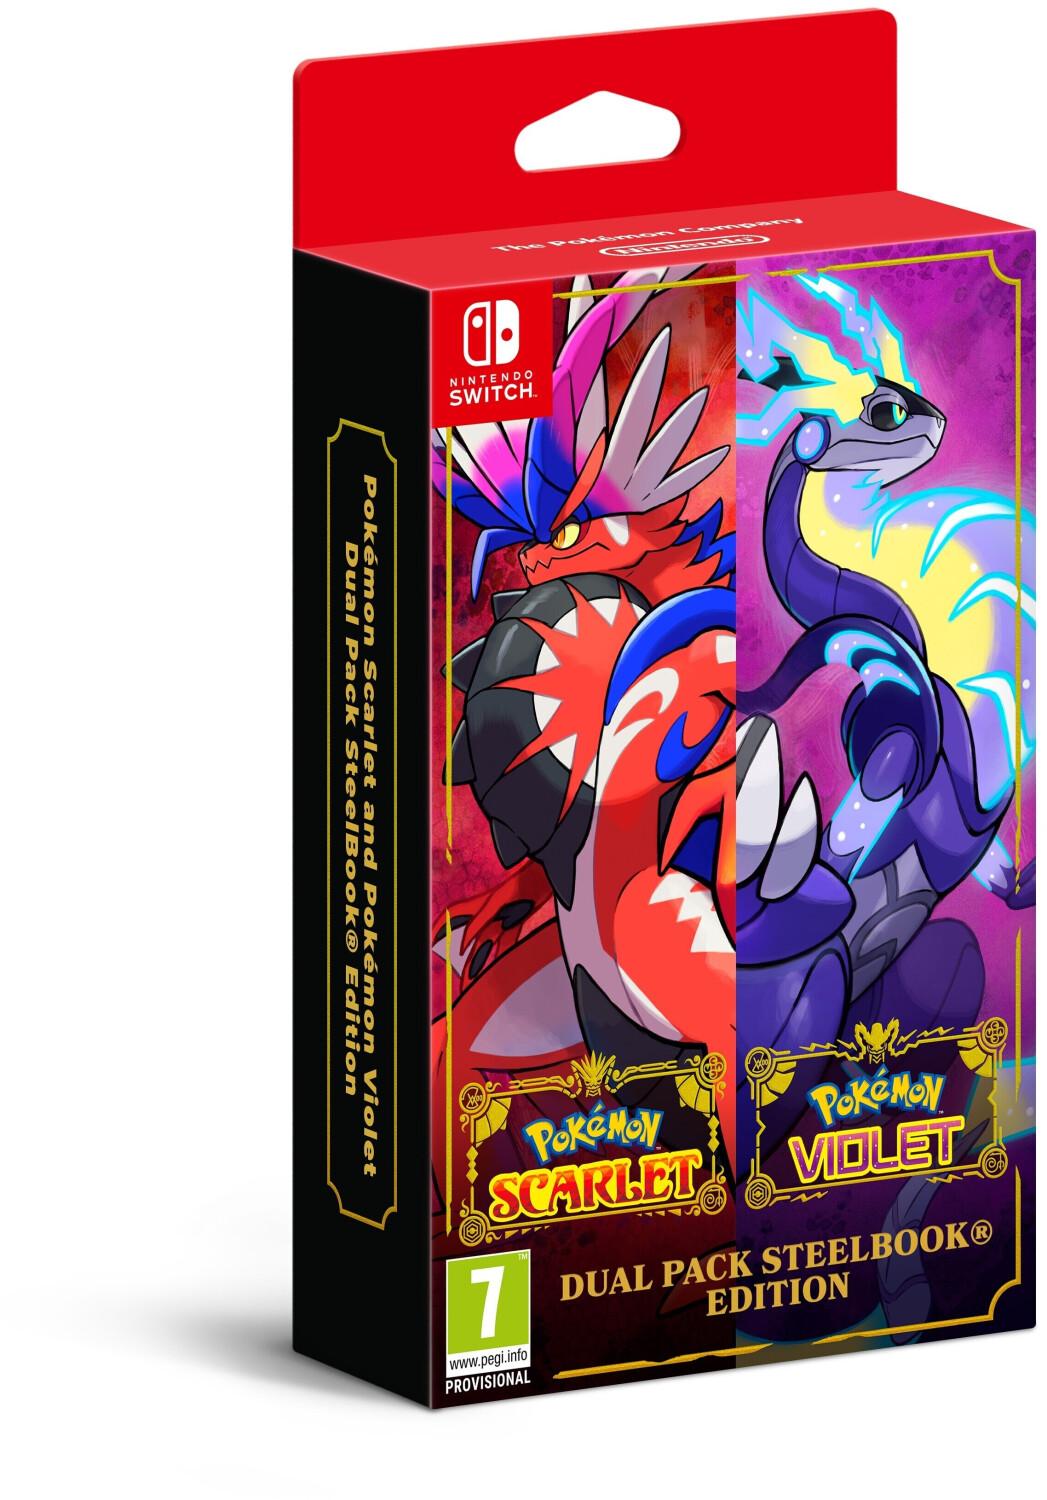 Photos - Game Nintendo Pokémon: Scarlet + Pokémon: Violet - Dual Pack Steelbook Edition 